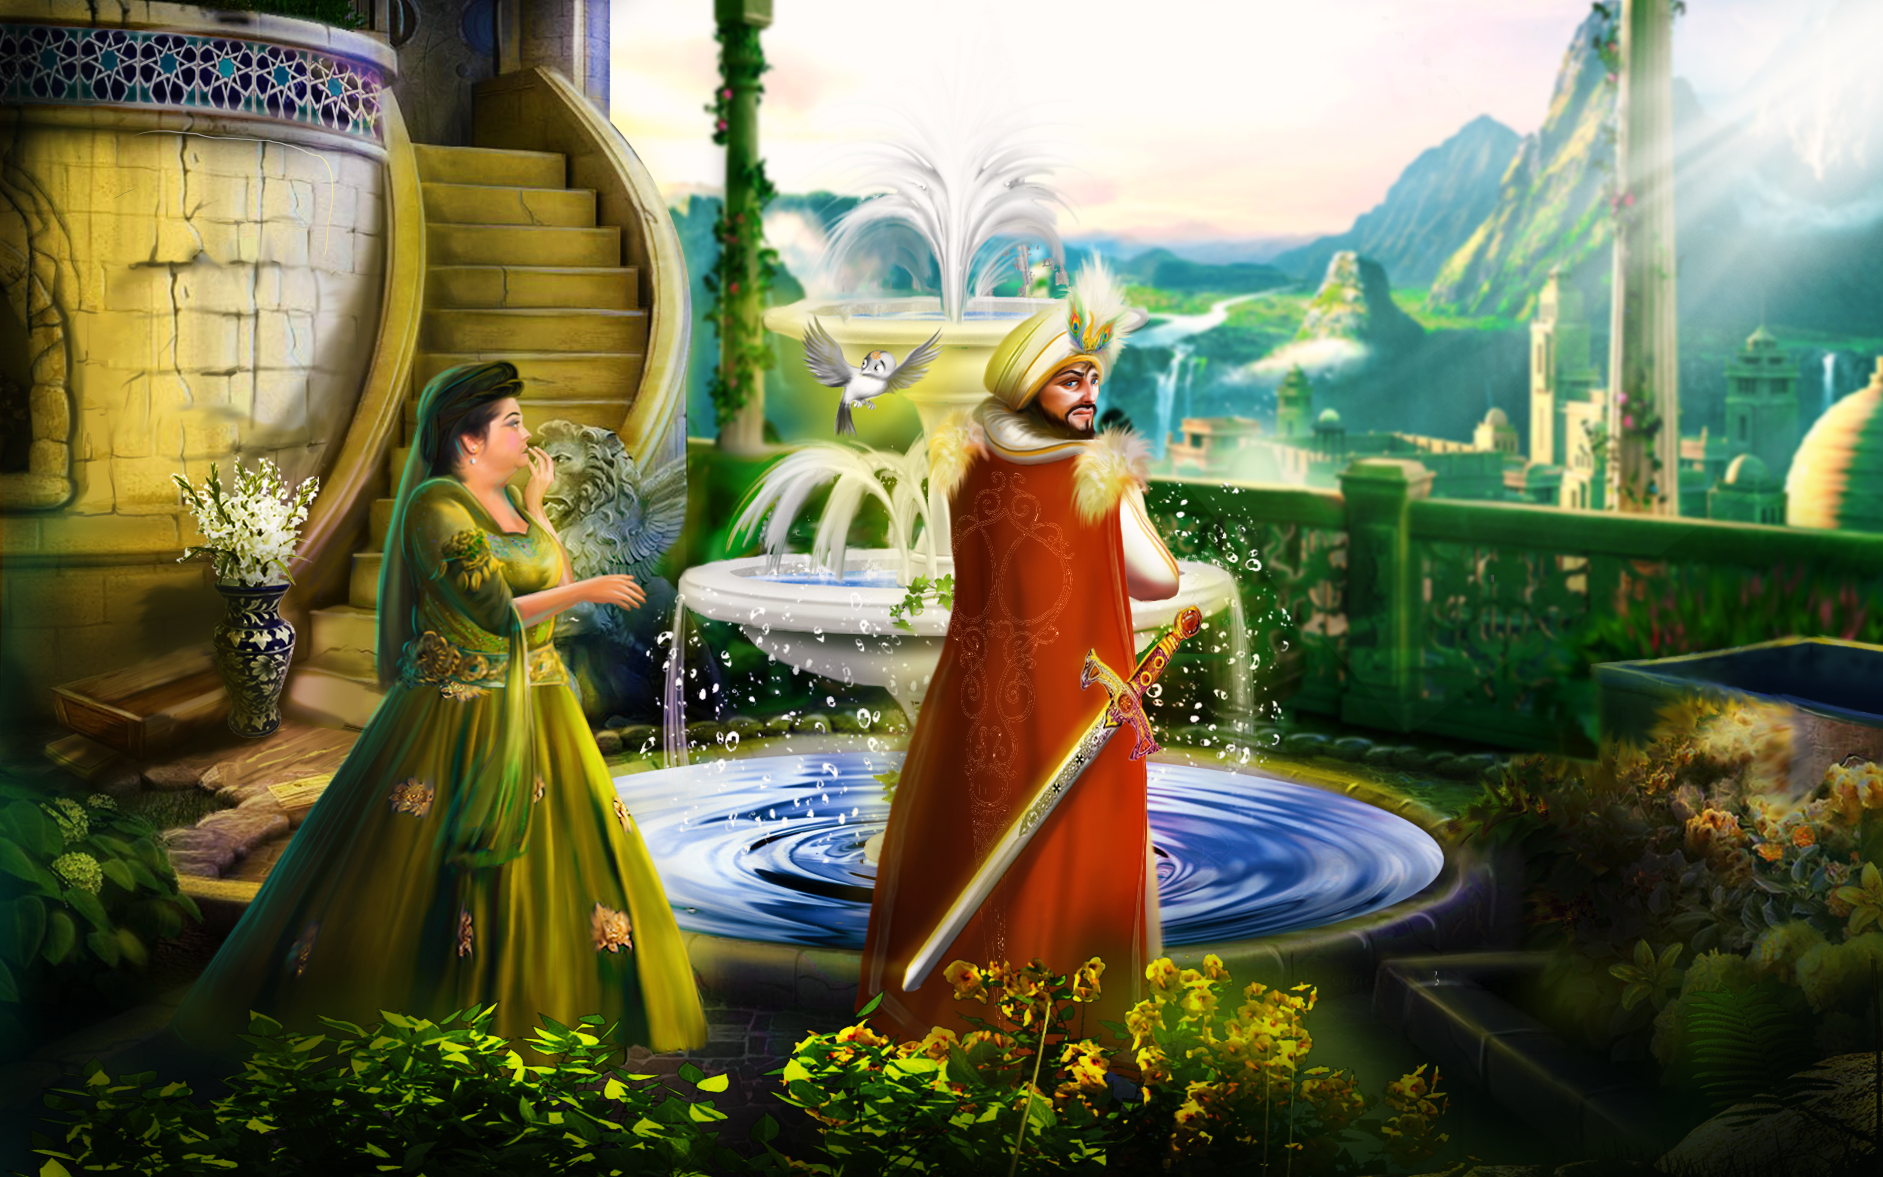 Prince Irkan and Fatima his caretaker